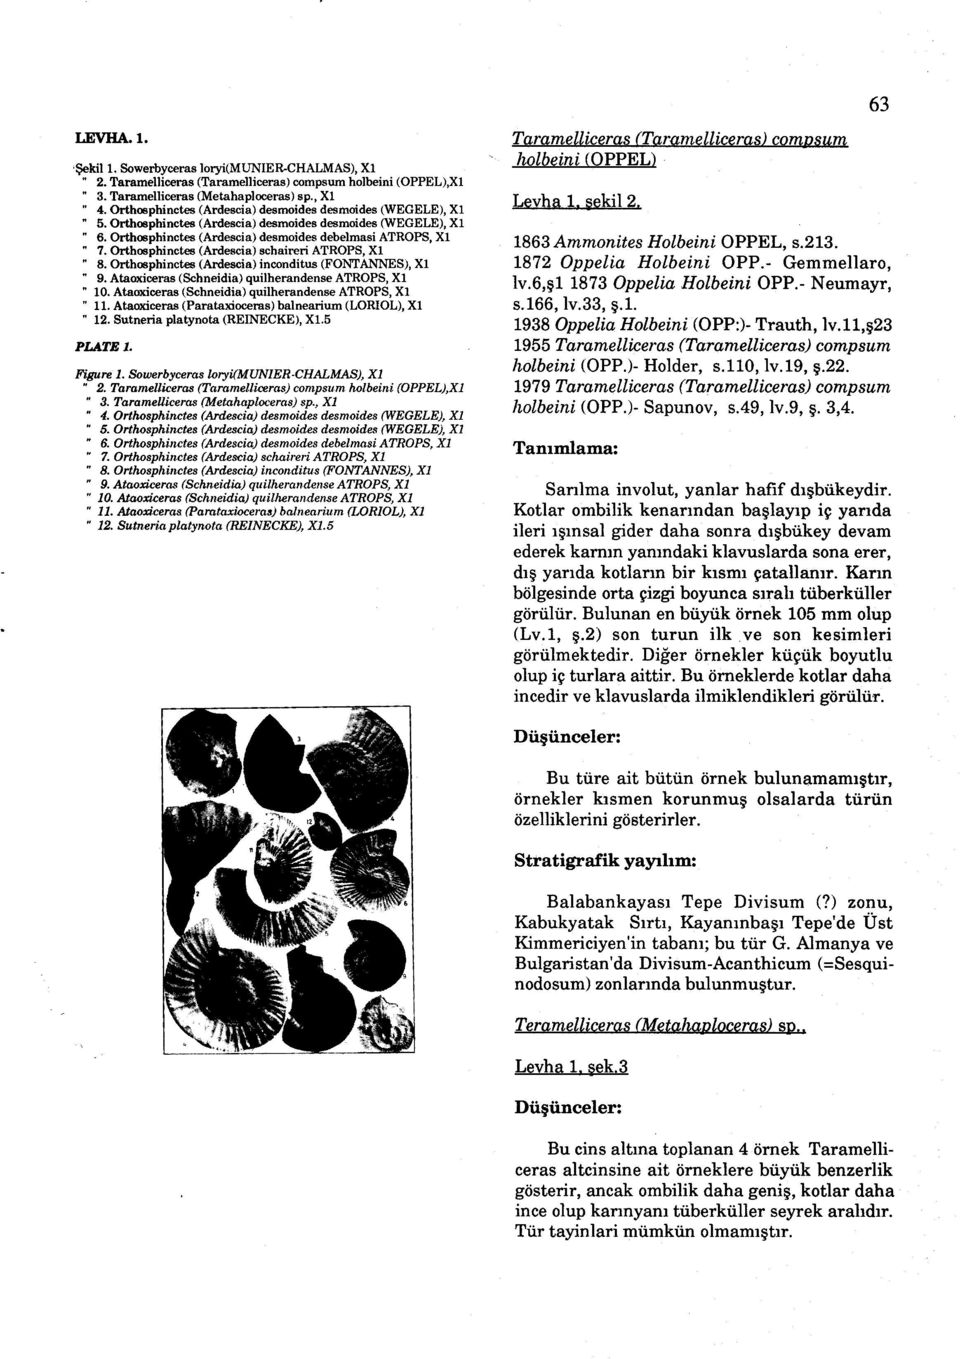 Orthosphinctes (Ardescia) schaireri ATROPS, XL. 8. Orthosphinctes (Ardescia) inconditus (FONTANNES), Xl. 9. Ataoxiceras (Schneidia) qui1herandense ATROPS, XL. 10.